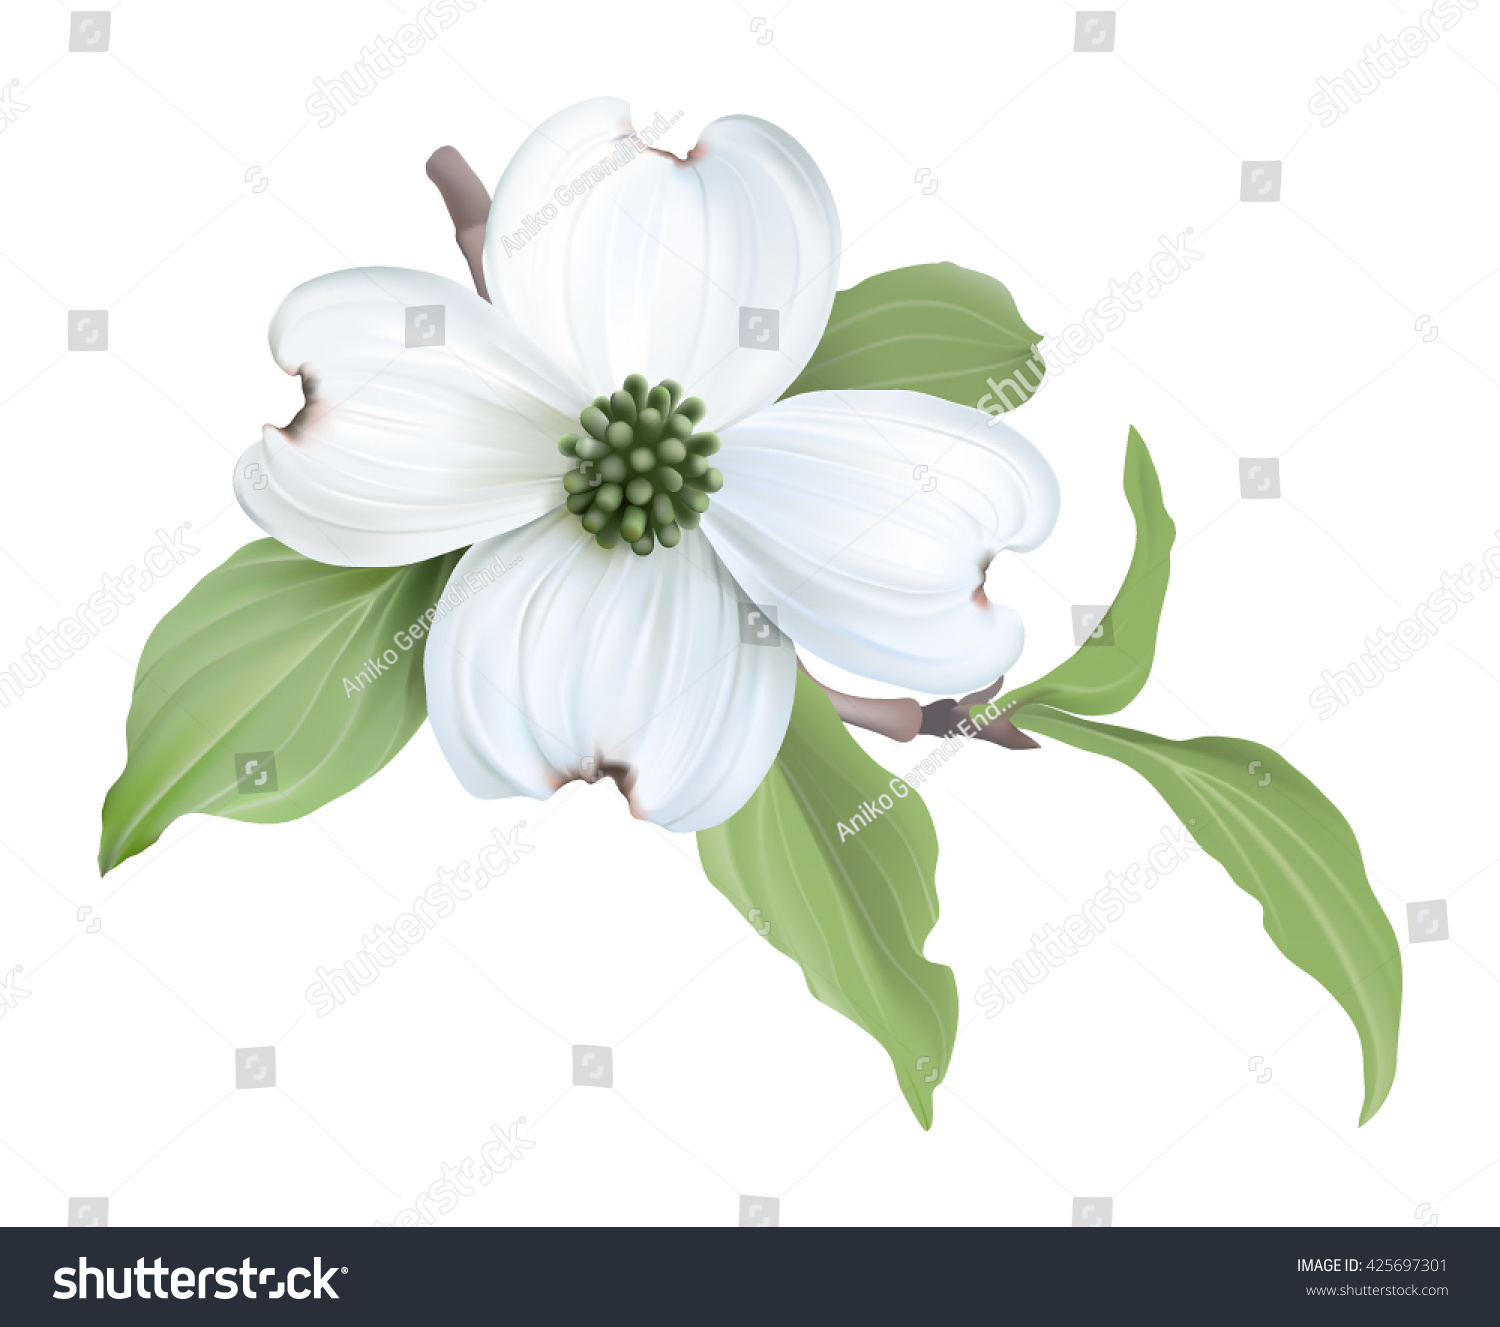 SVG of White Dogwood (Cornus florida).
Hand drawn vector illustration of blooming dogwood on transparent background.
 svg